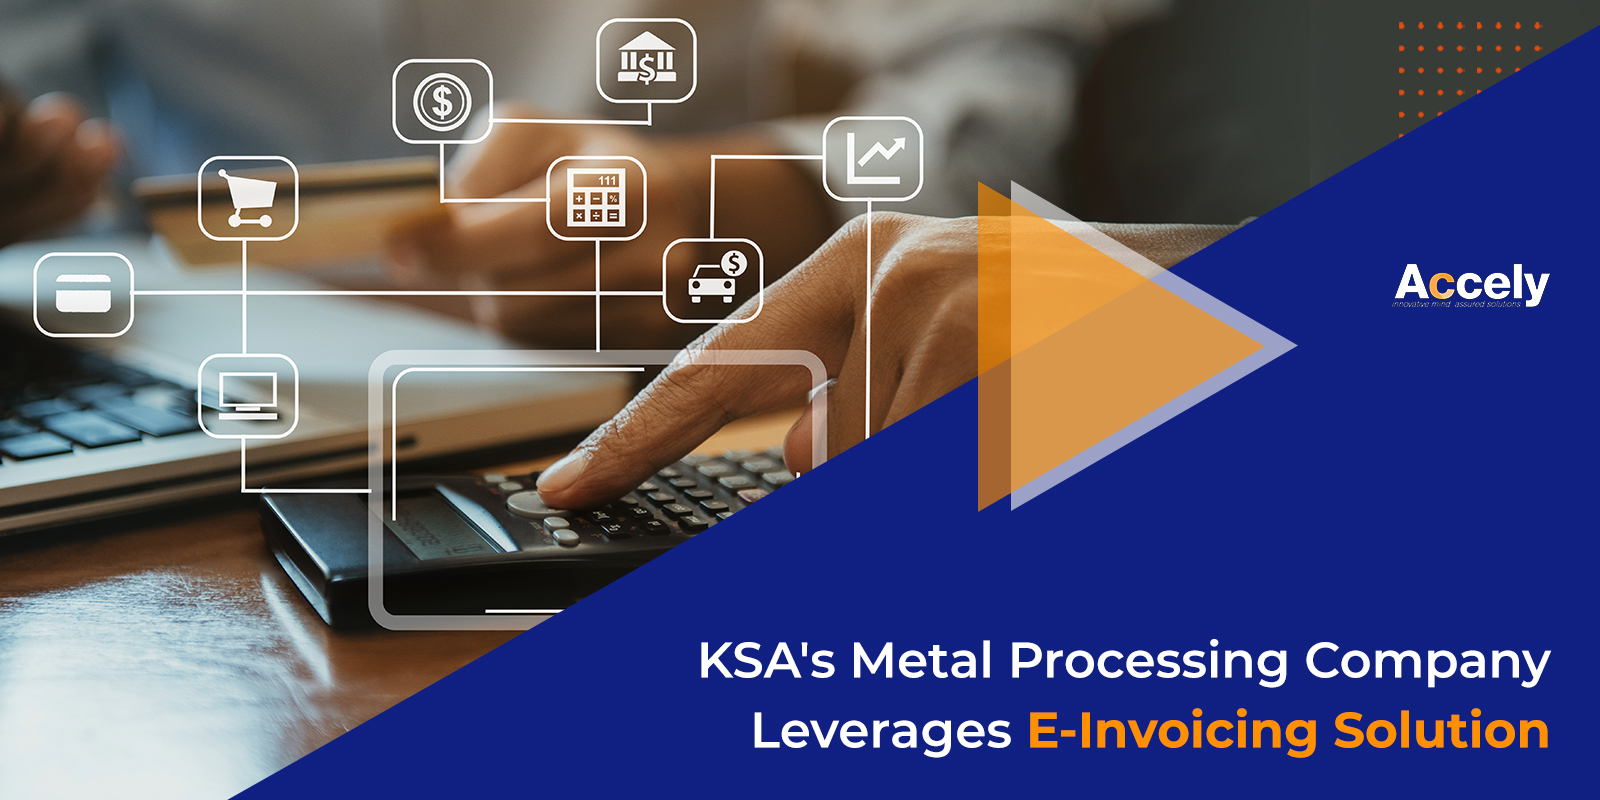 KSA's Metal Processing Company Leverages E-Invoicing Solution